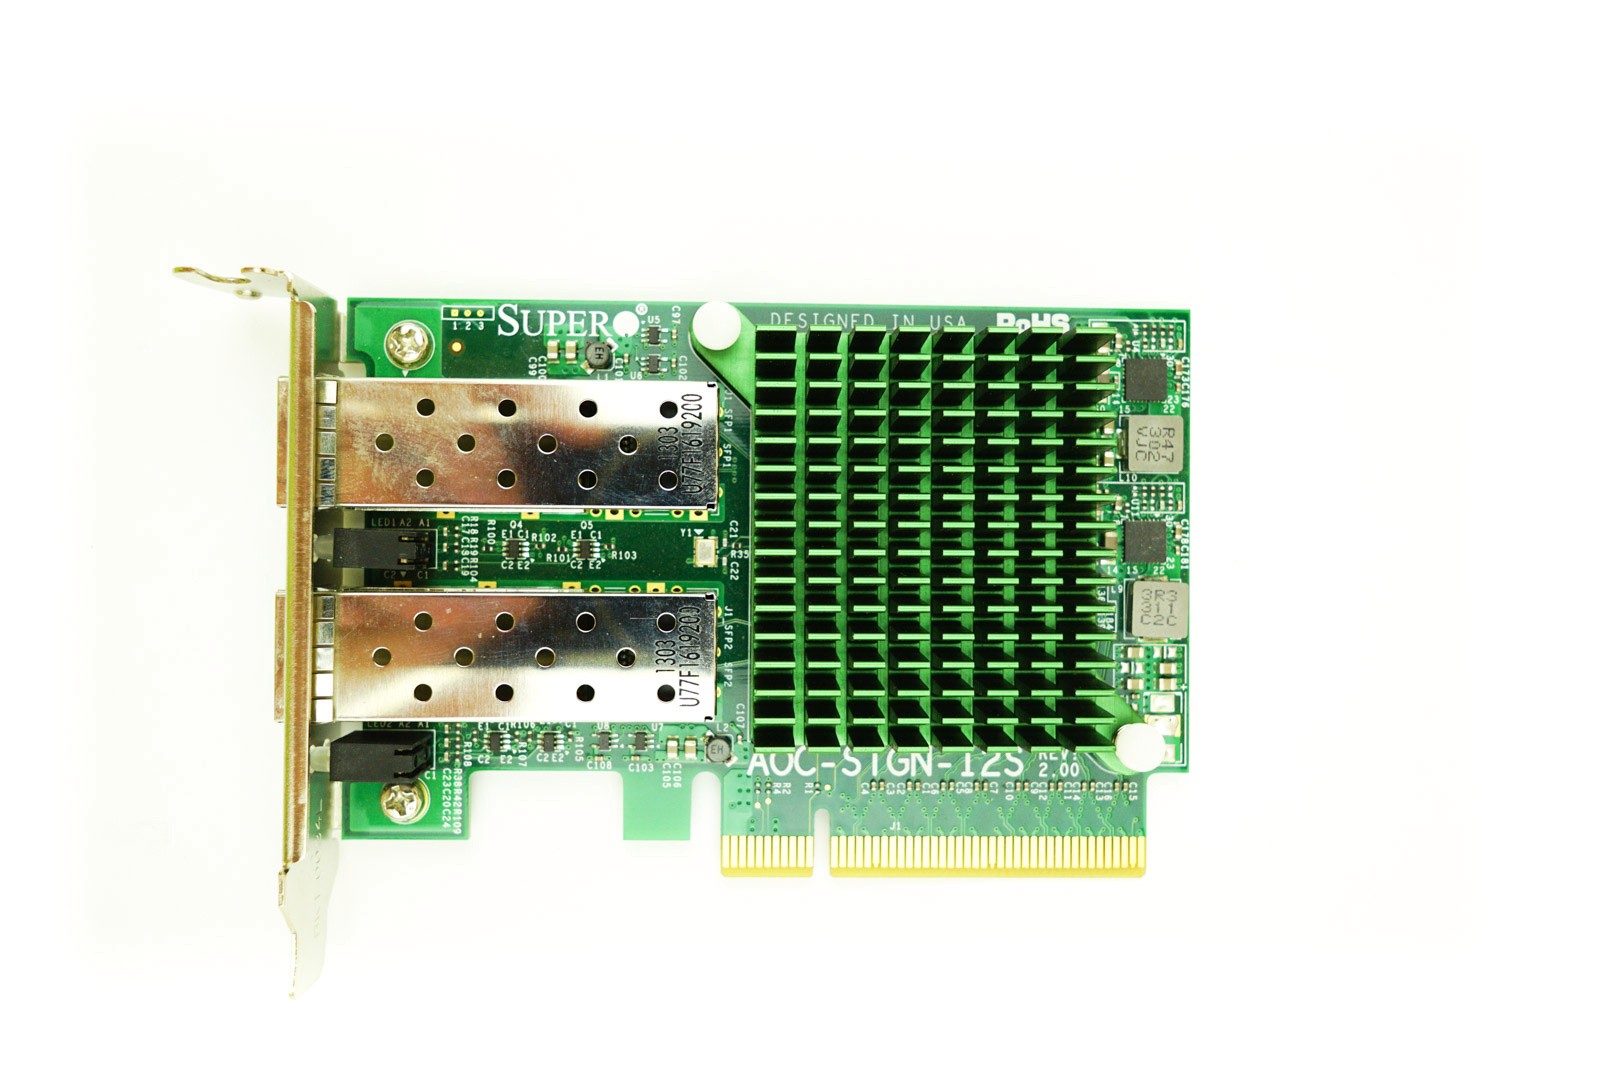 Supermicro AOC-STGN-I2S Dual Port - 10GbE SFP+ Low Profile PCIe-x8 Ethernet